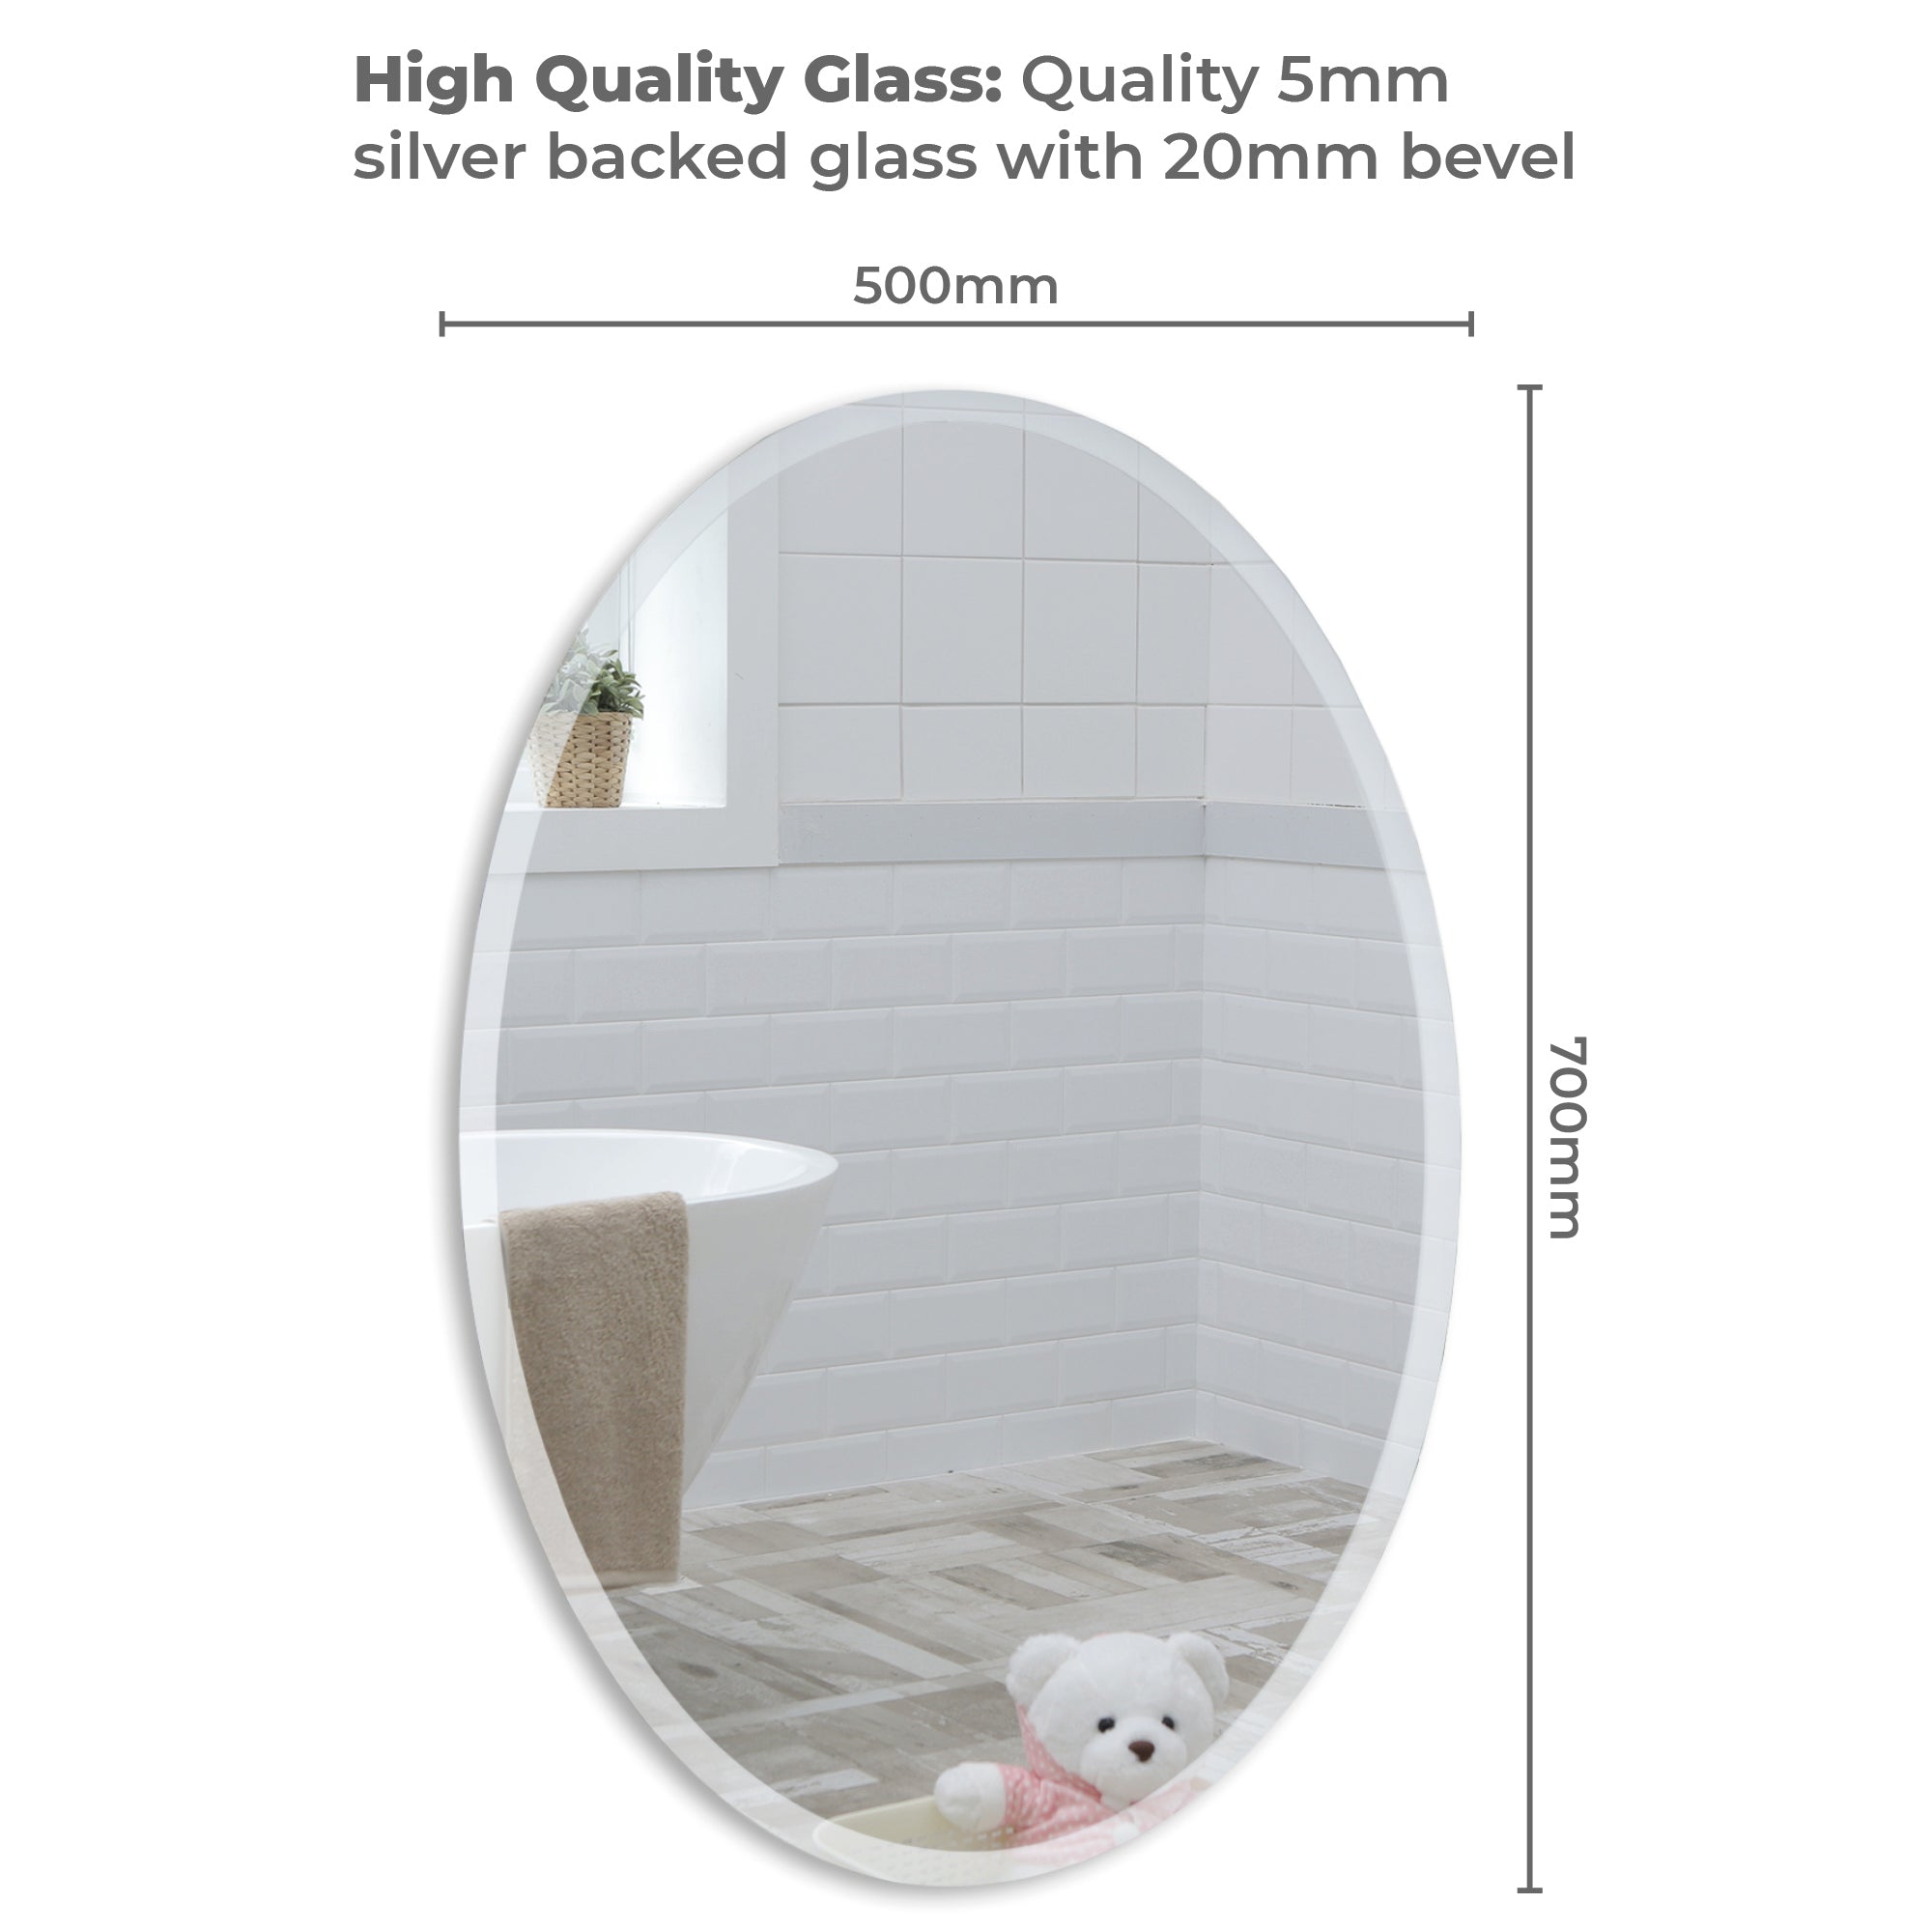 Copy of Diana Modern Oval Bathroom Wall Mirror 2 Sizes 50Hx40Wcm and 70Hx50Wcm